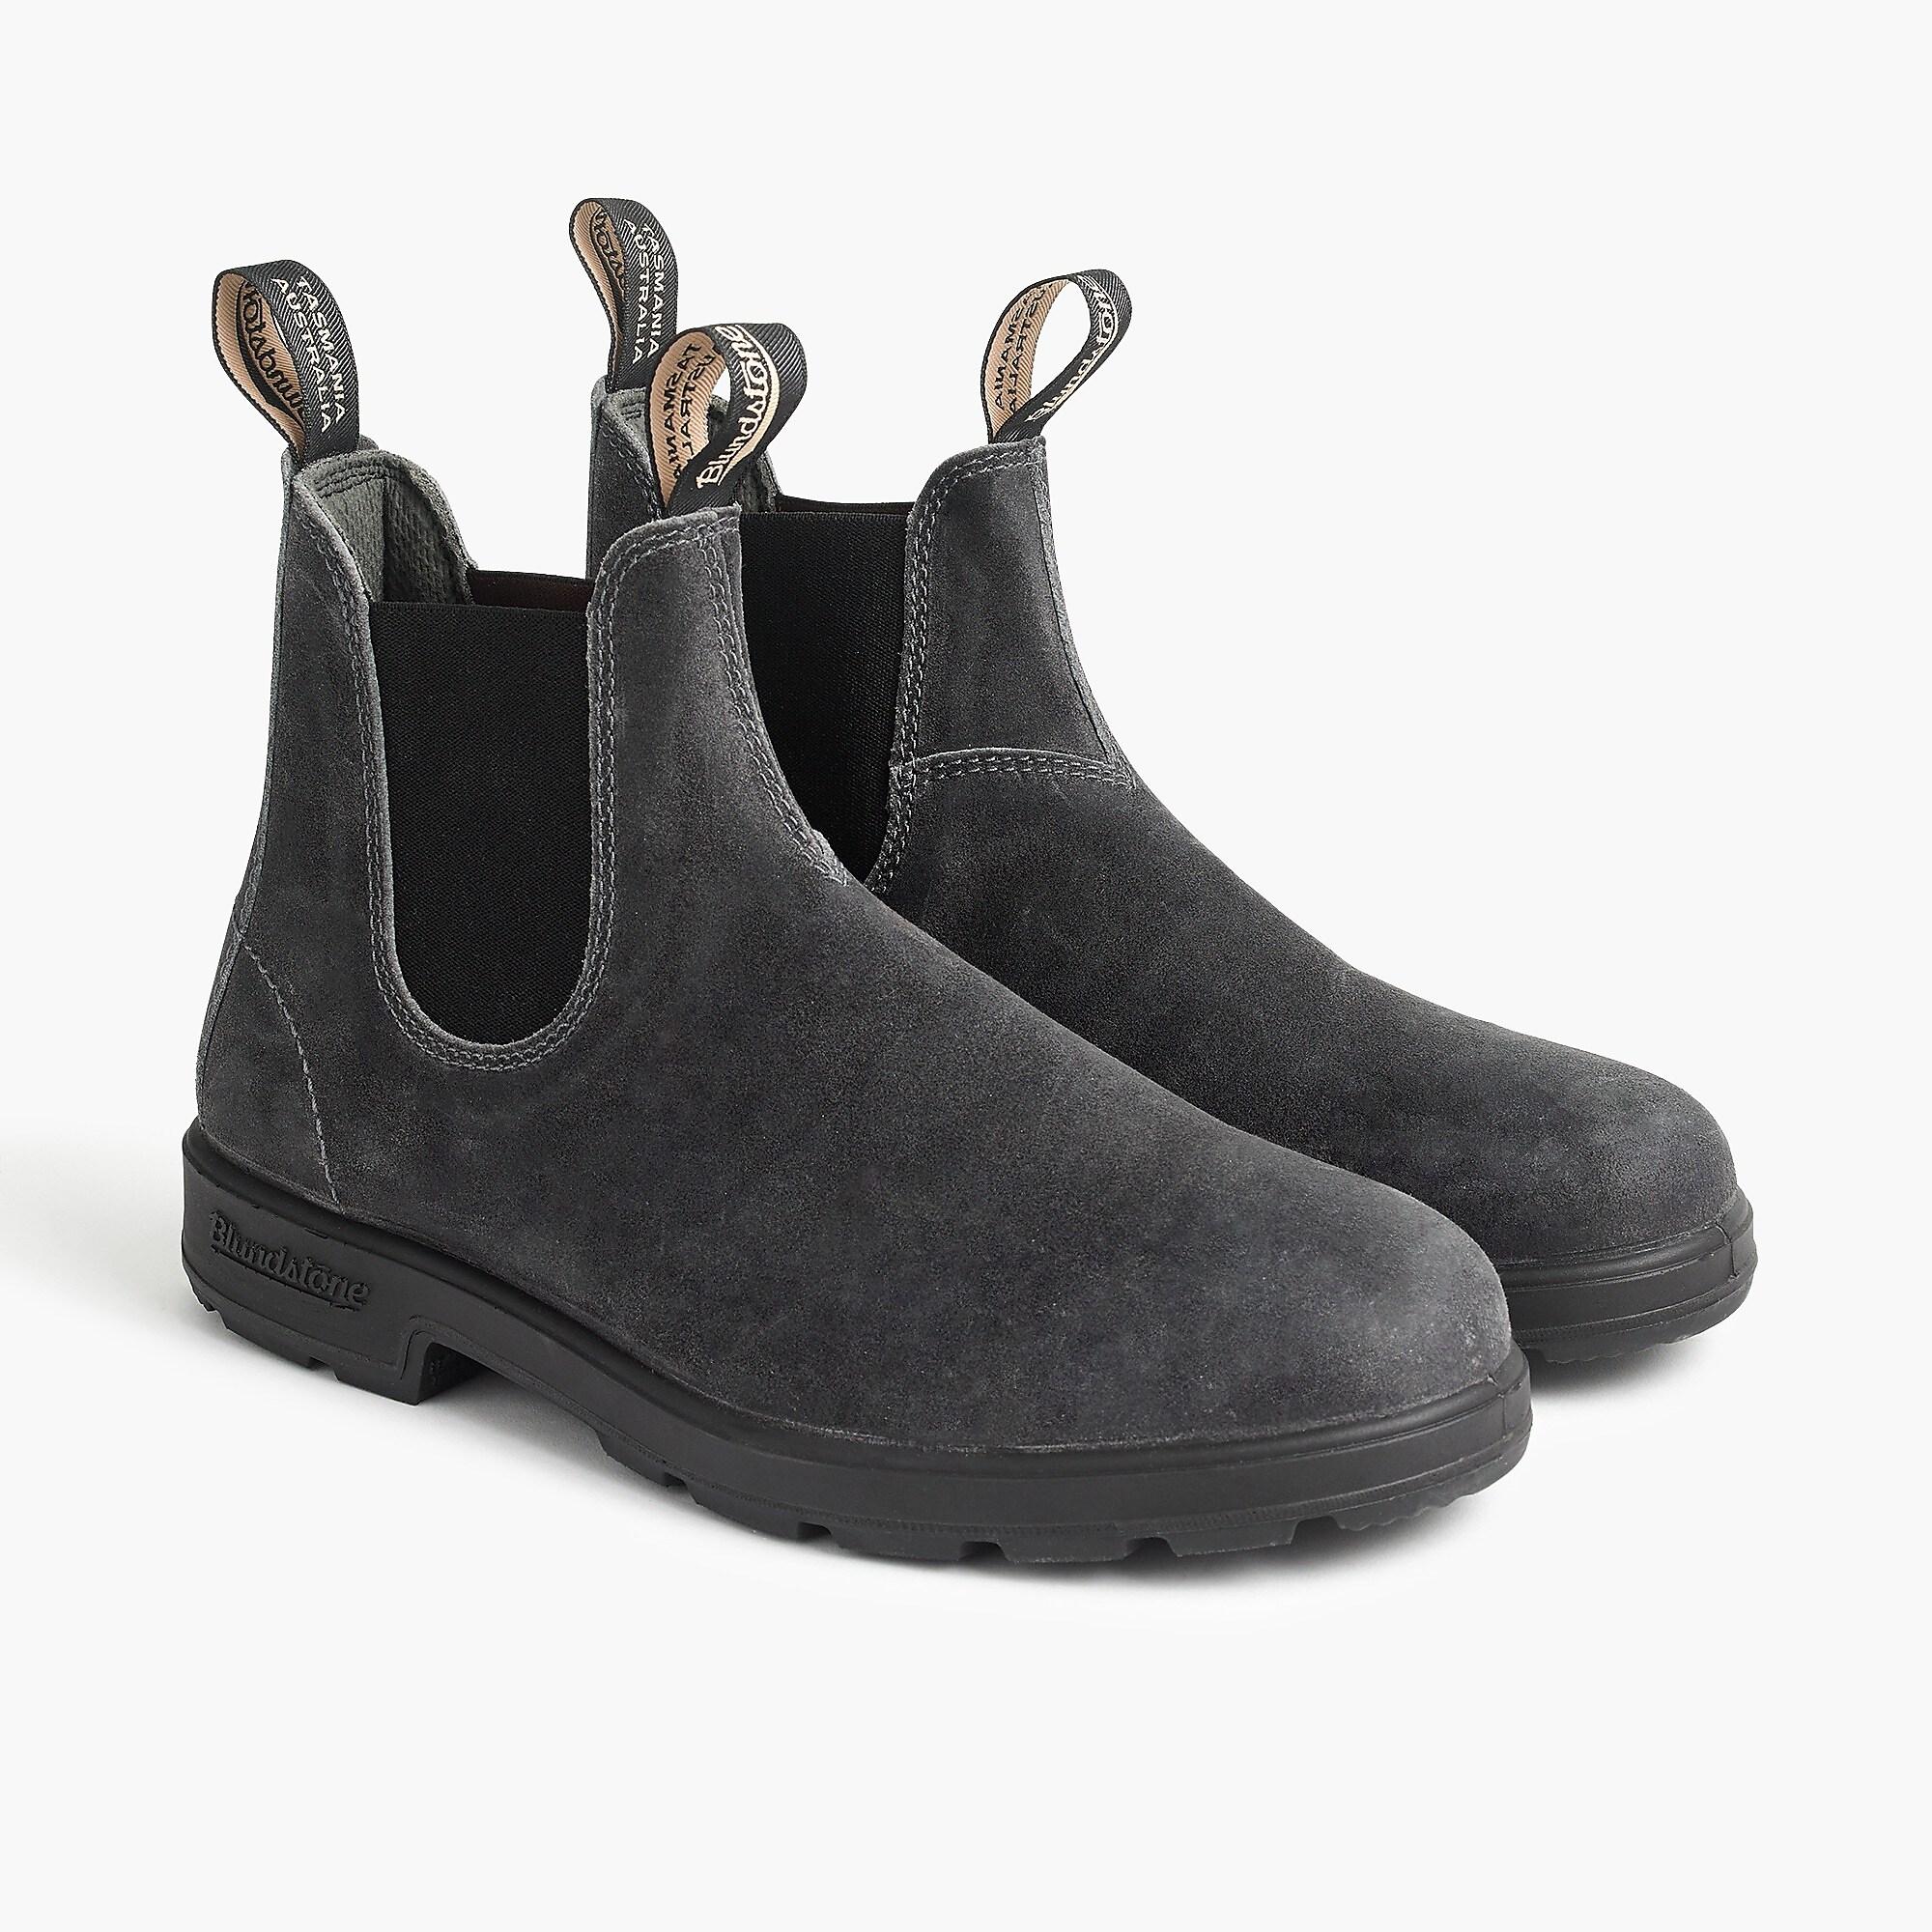 Blundstone Suede ® 1910 Boots in Steel Gray (Grey) for Men - Lyst